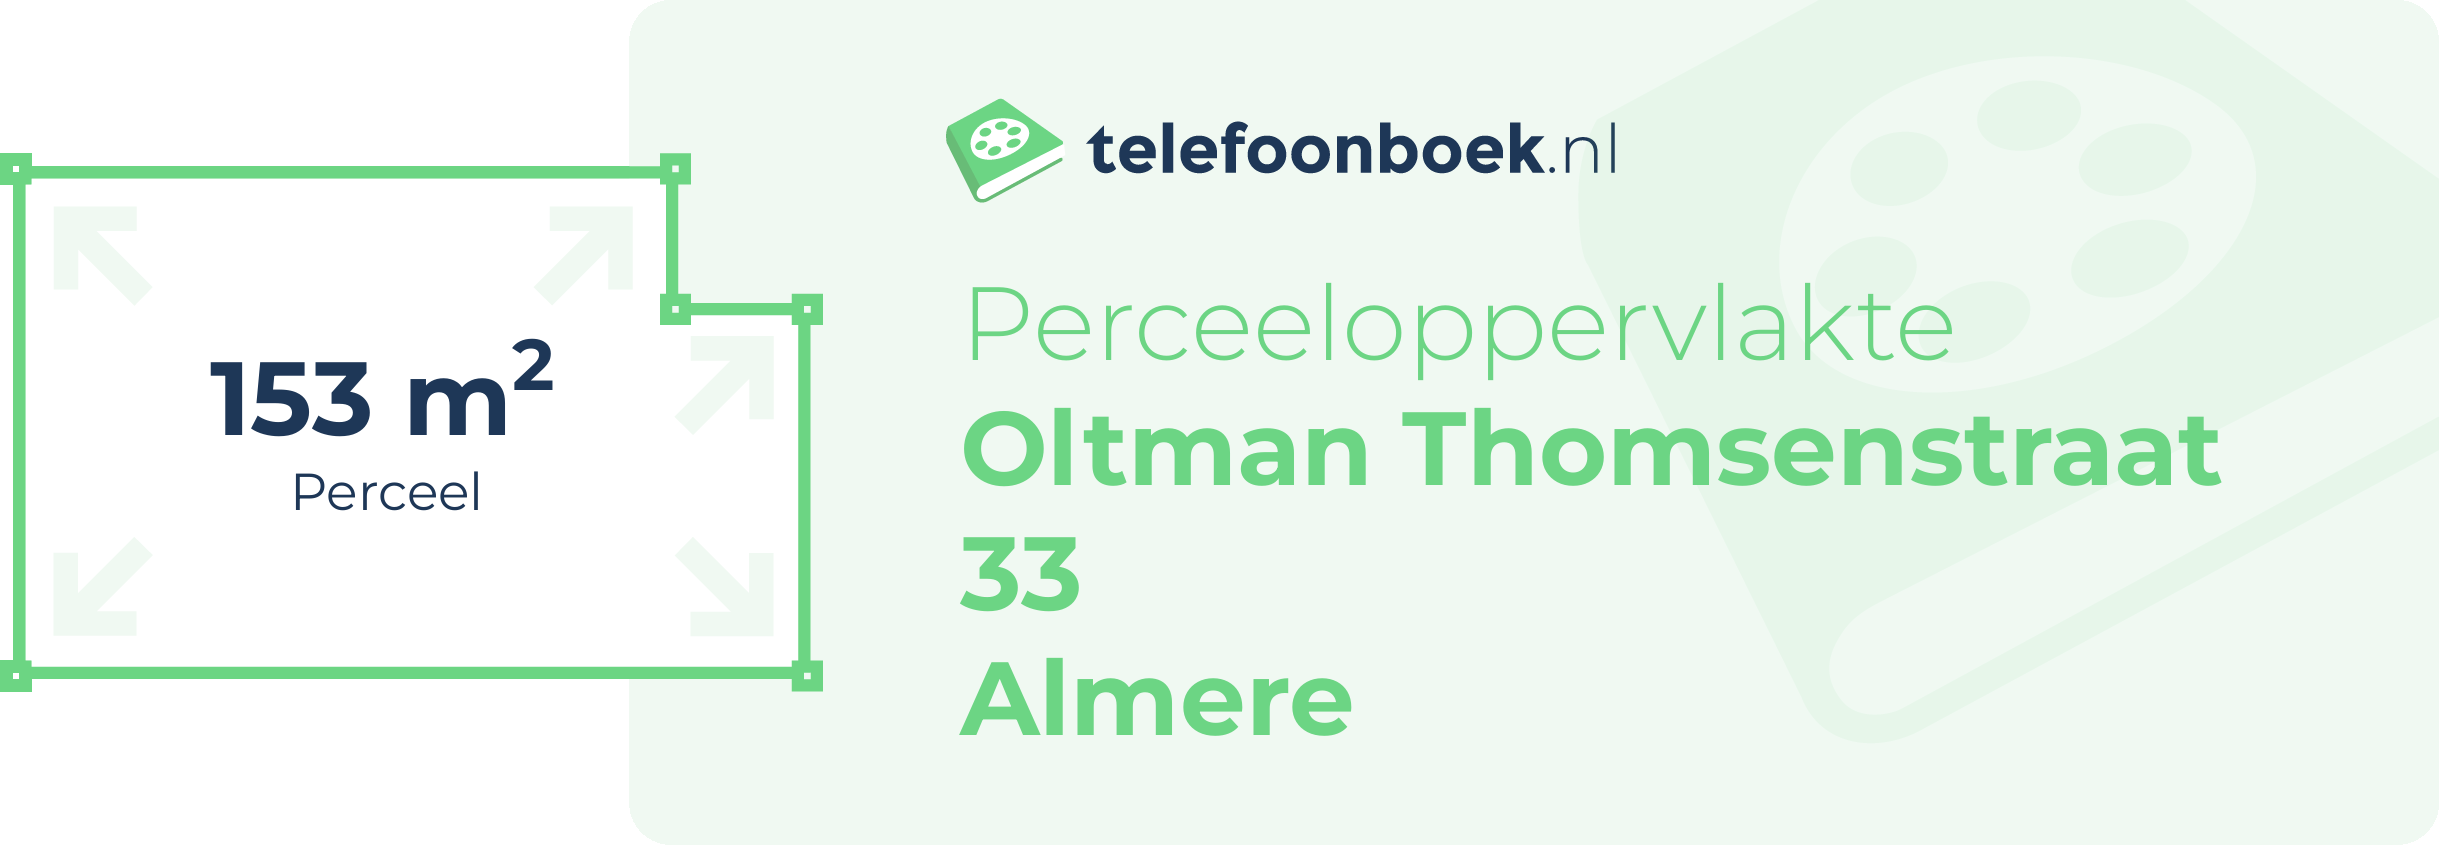 Perceeloppervlakte Oltman Thomsenstraat 33 Almere